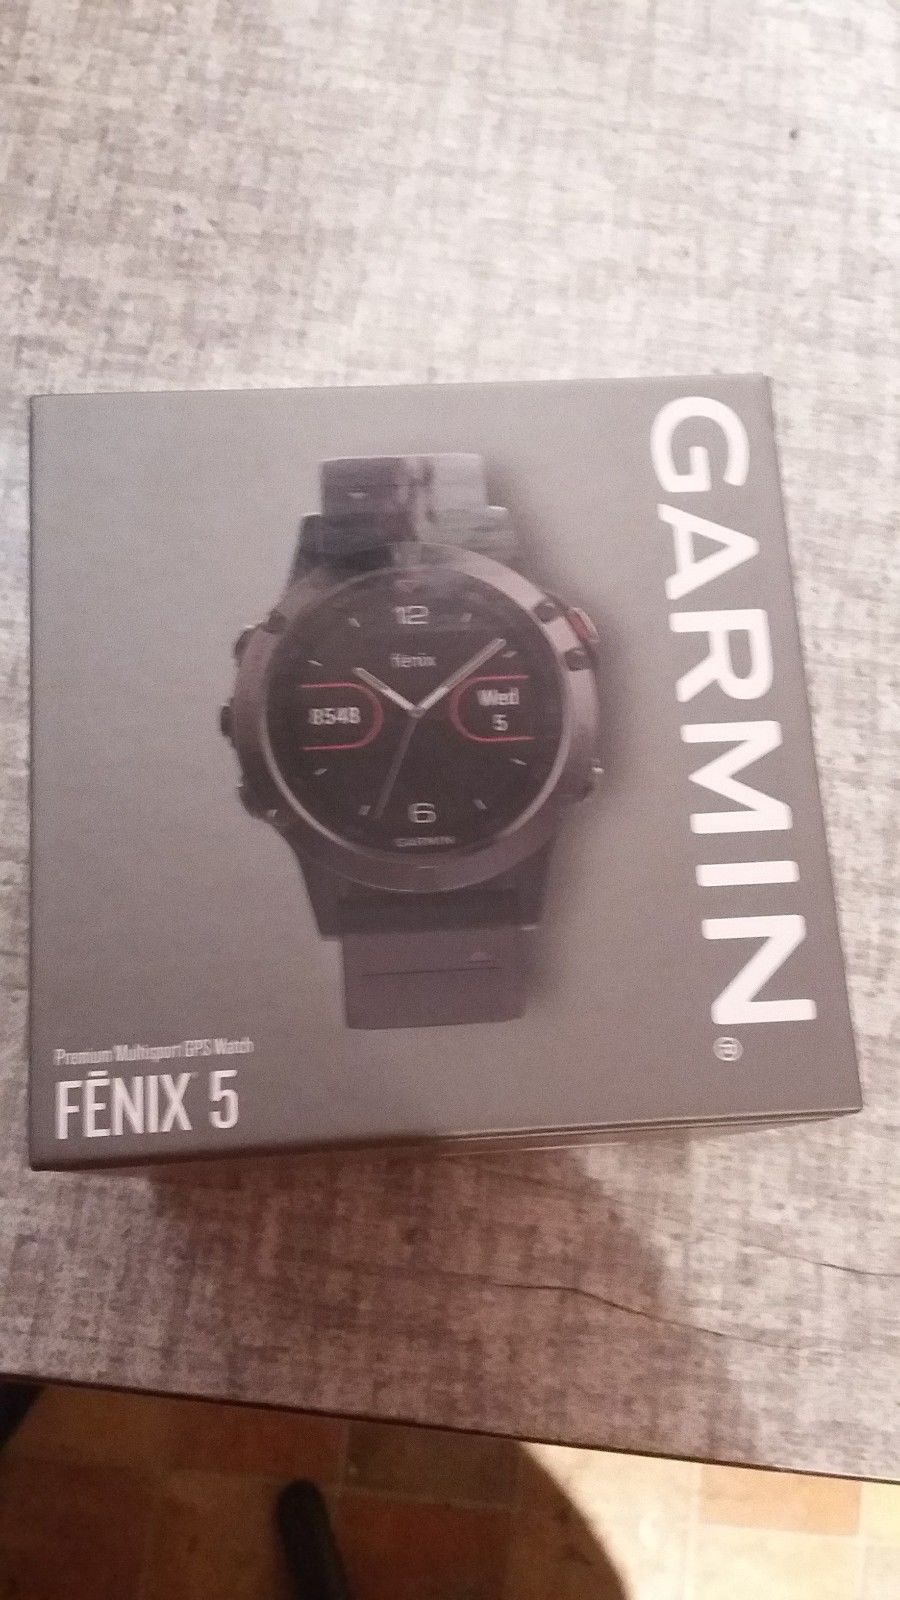 Garmin, Fenix 5 S, Sphire Edition Premium Multisport GPS Watch, Sportuhr, neu